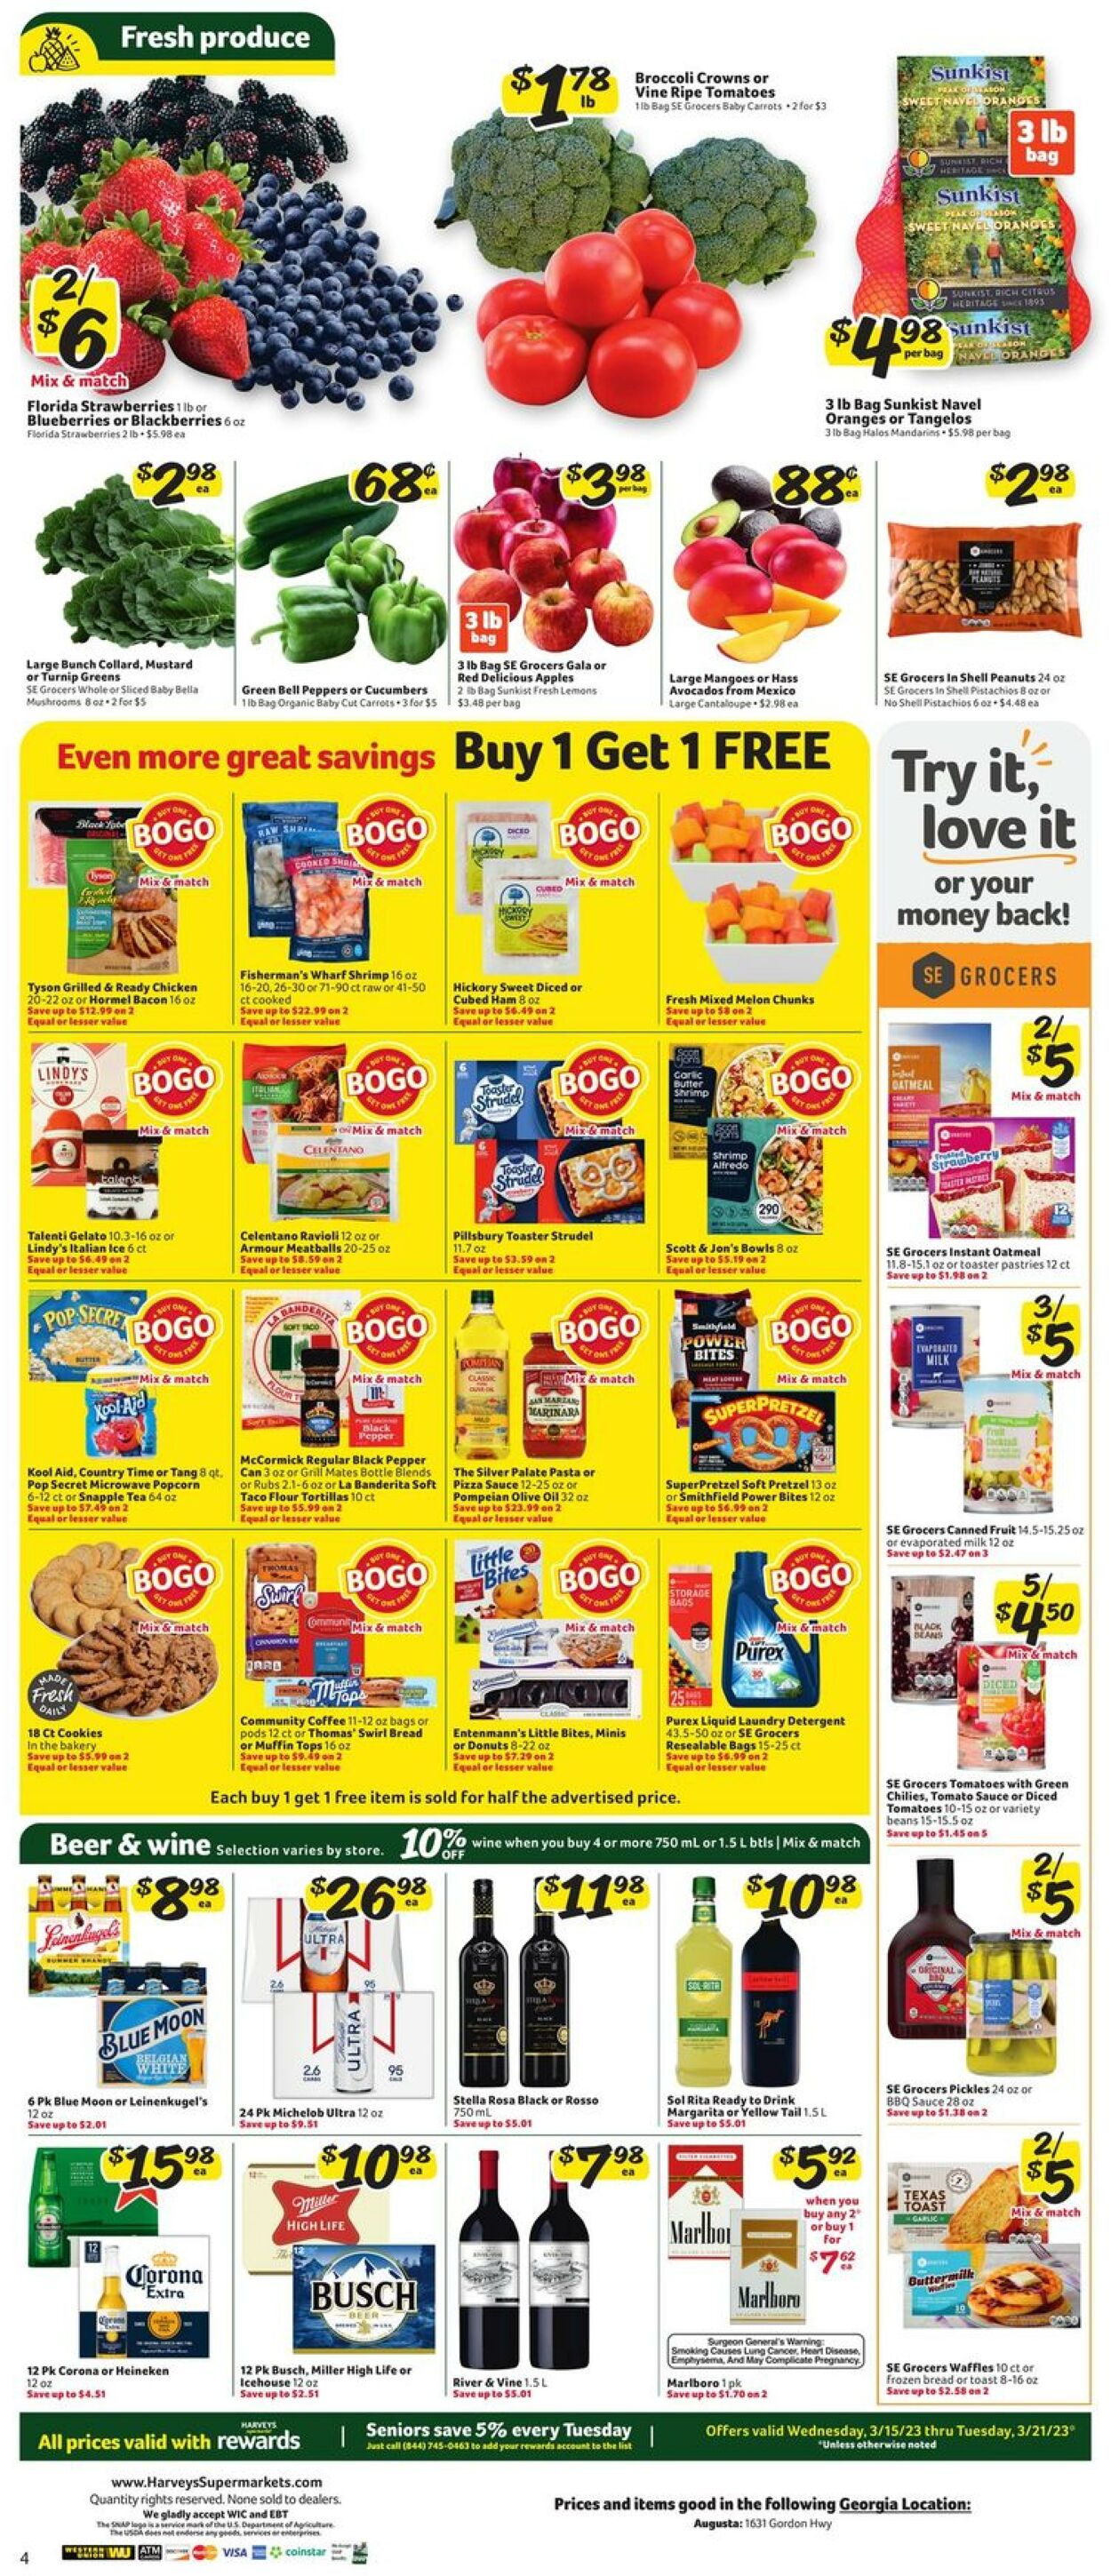 Weekly ad Harvey's Supermarkets 03/15/2023 - 03/21/2023